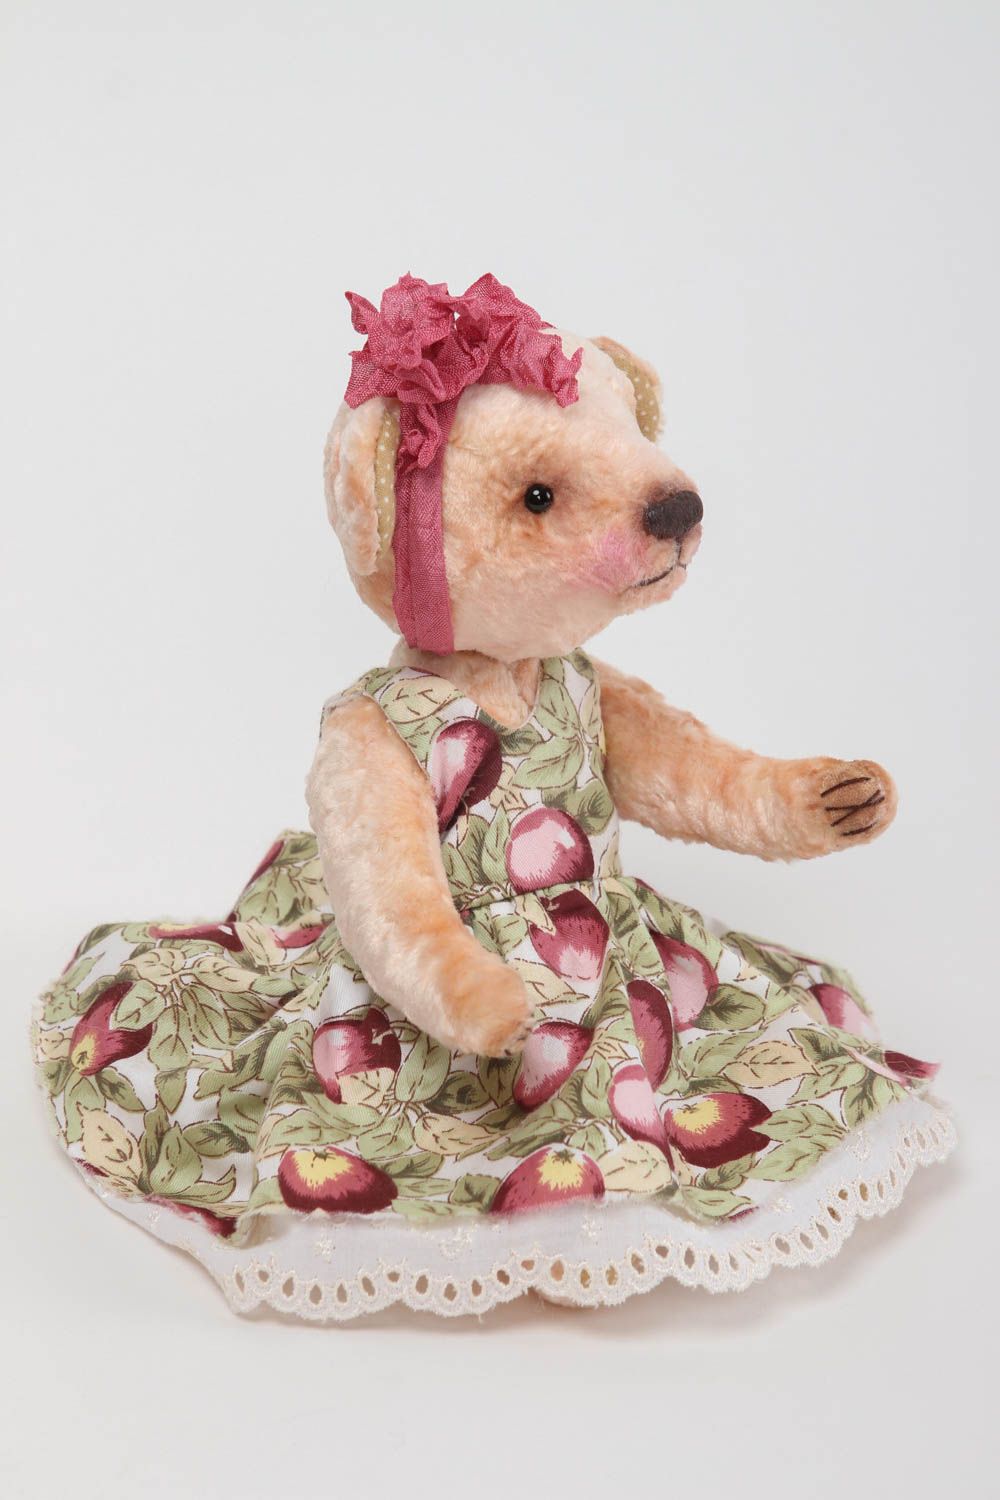 Vintage teddy bear in a dress .